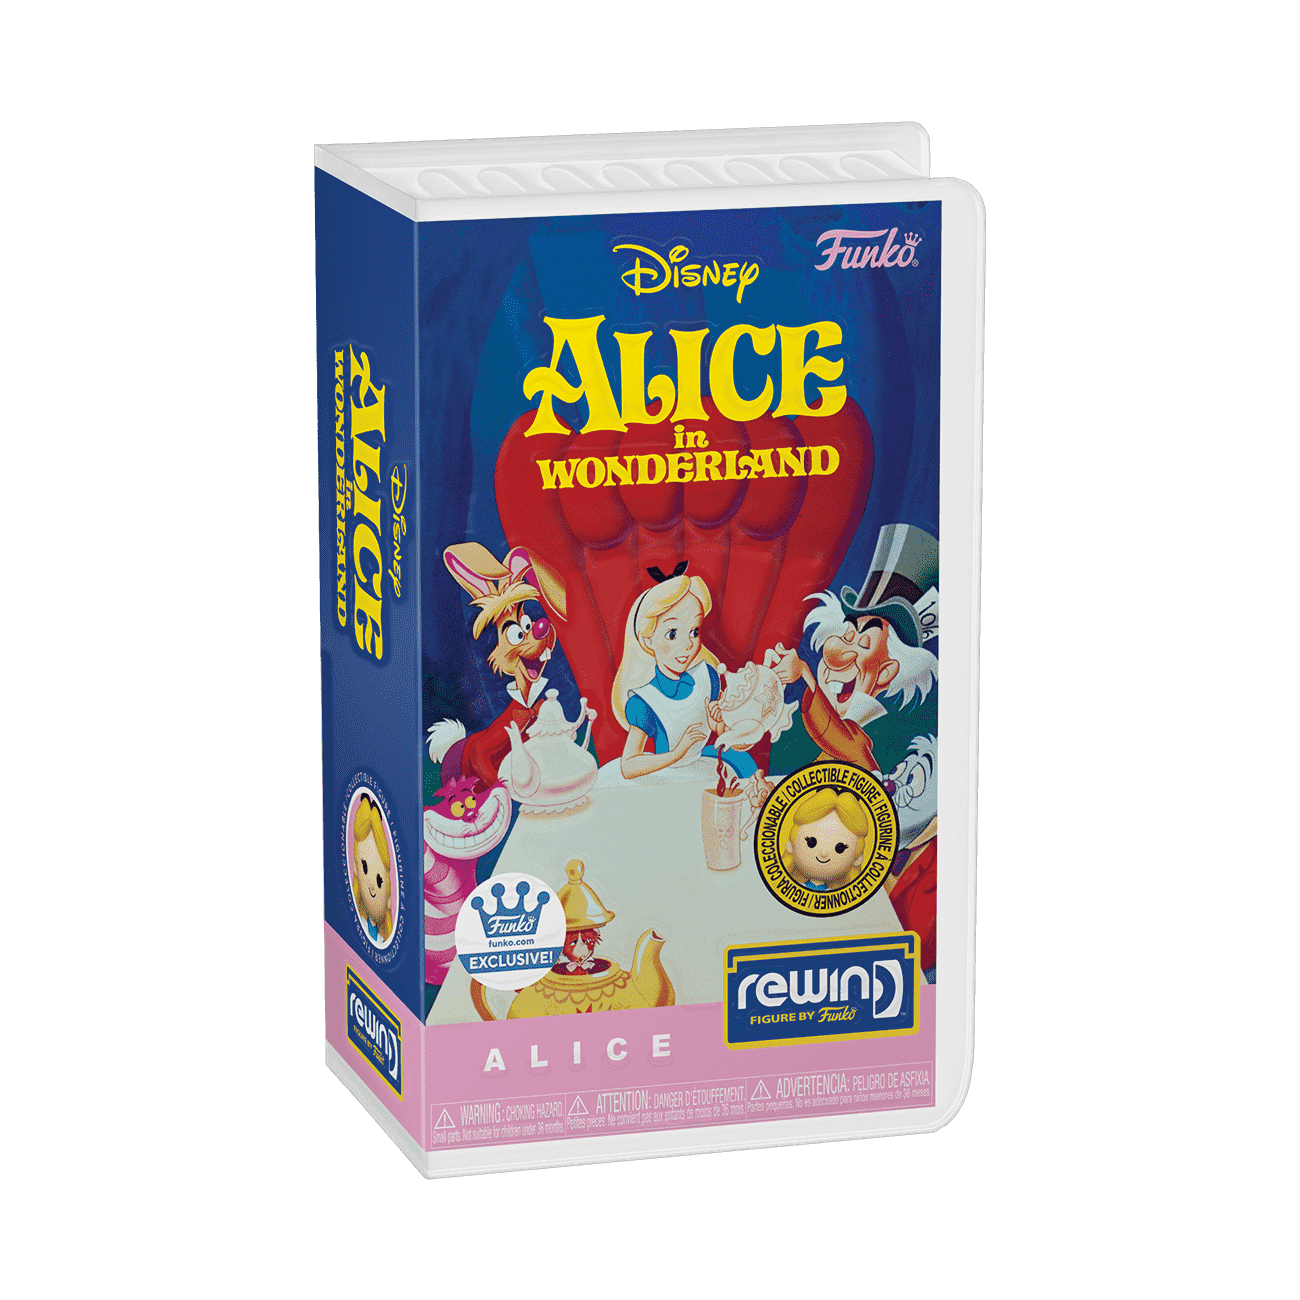 Vintage Glam Alice In Wonderland Party